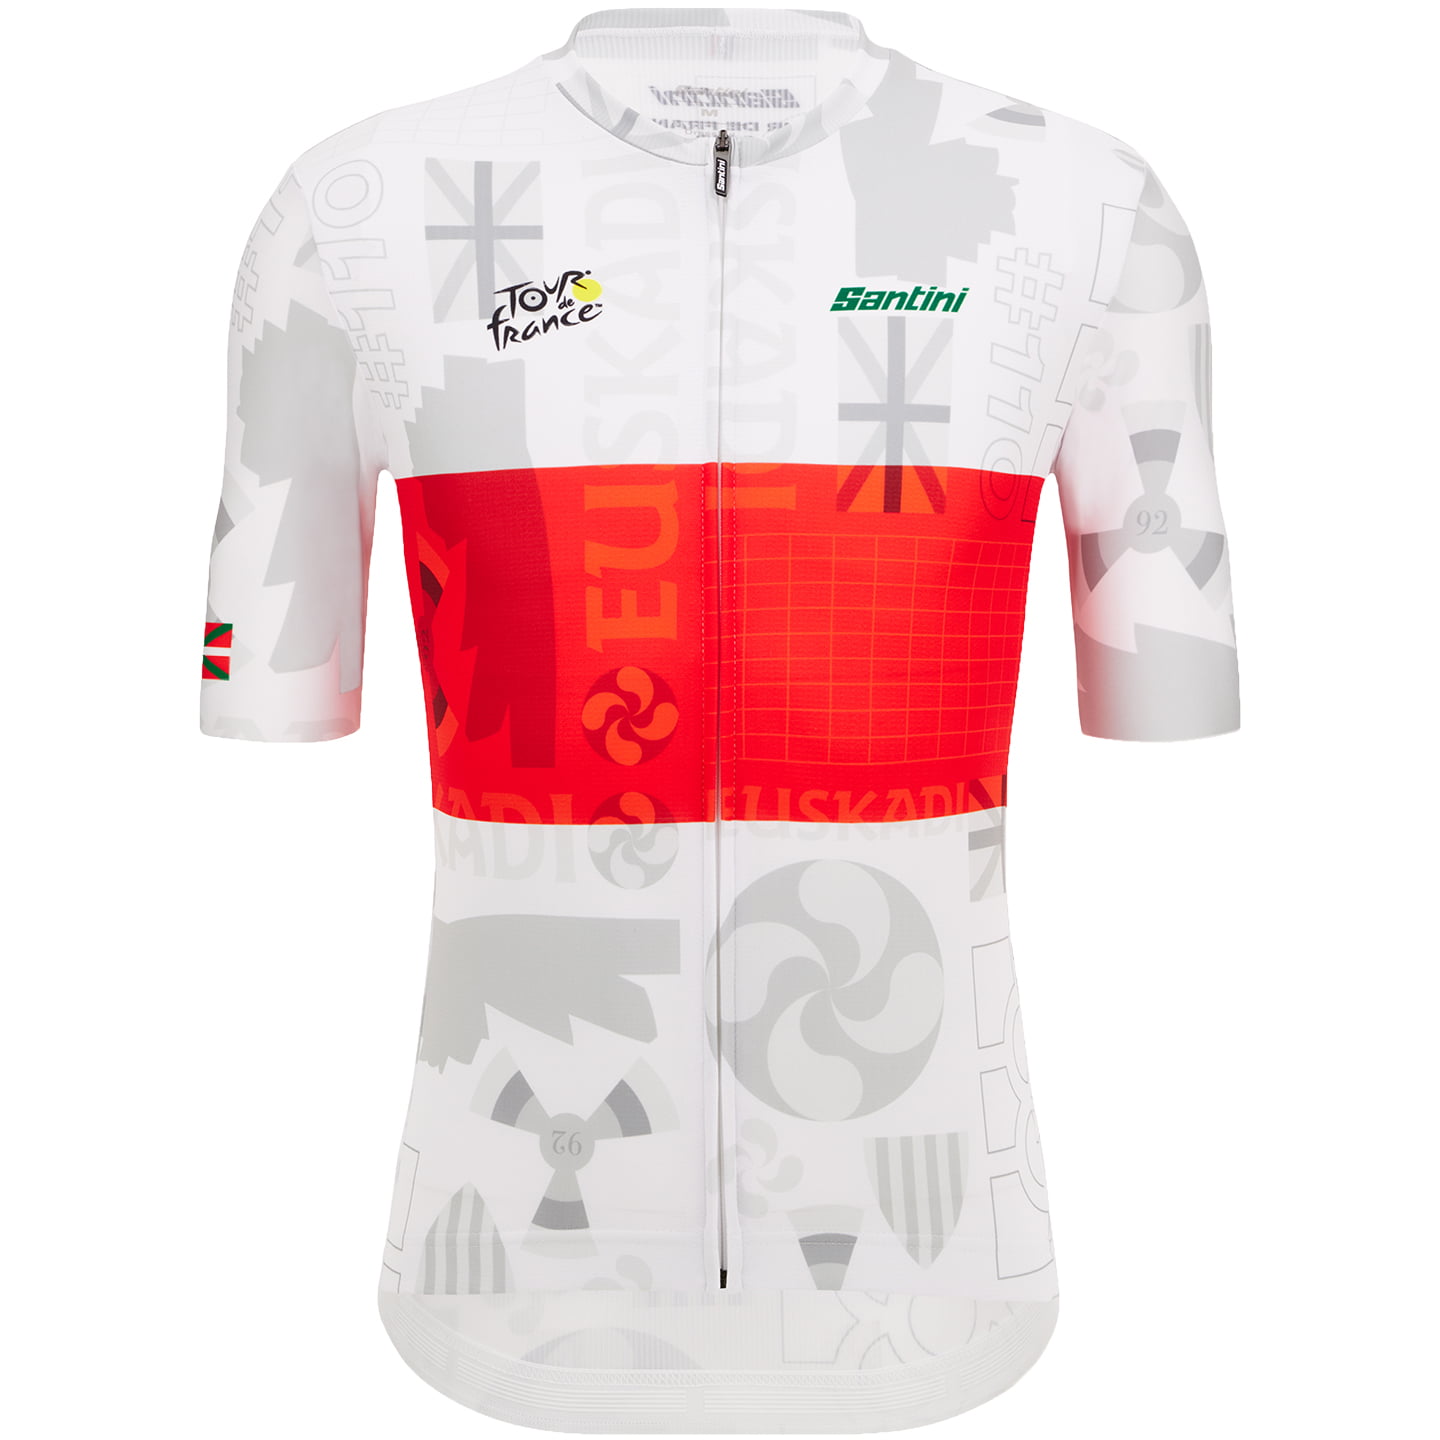 TOUR DE FRANCE Pais Vasco 2023 Short Sleeve Jersey, for men, size L, Cycling shirt, Cycle clothing